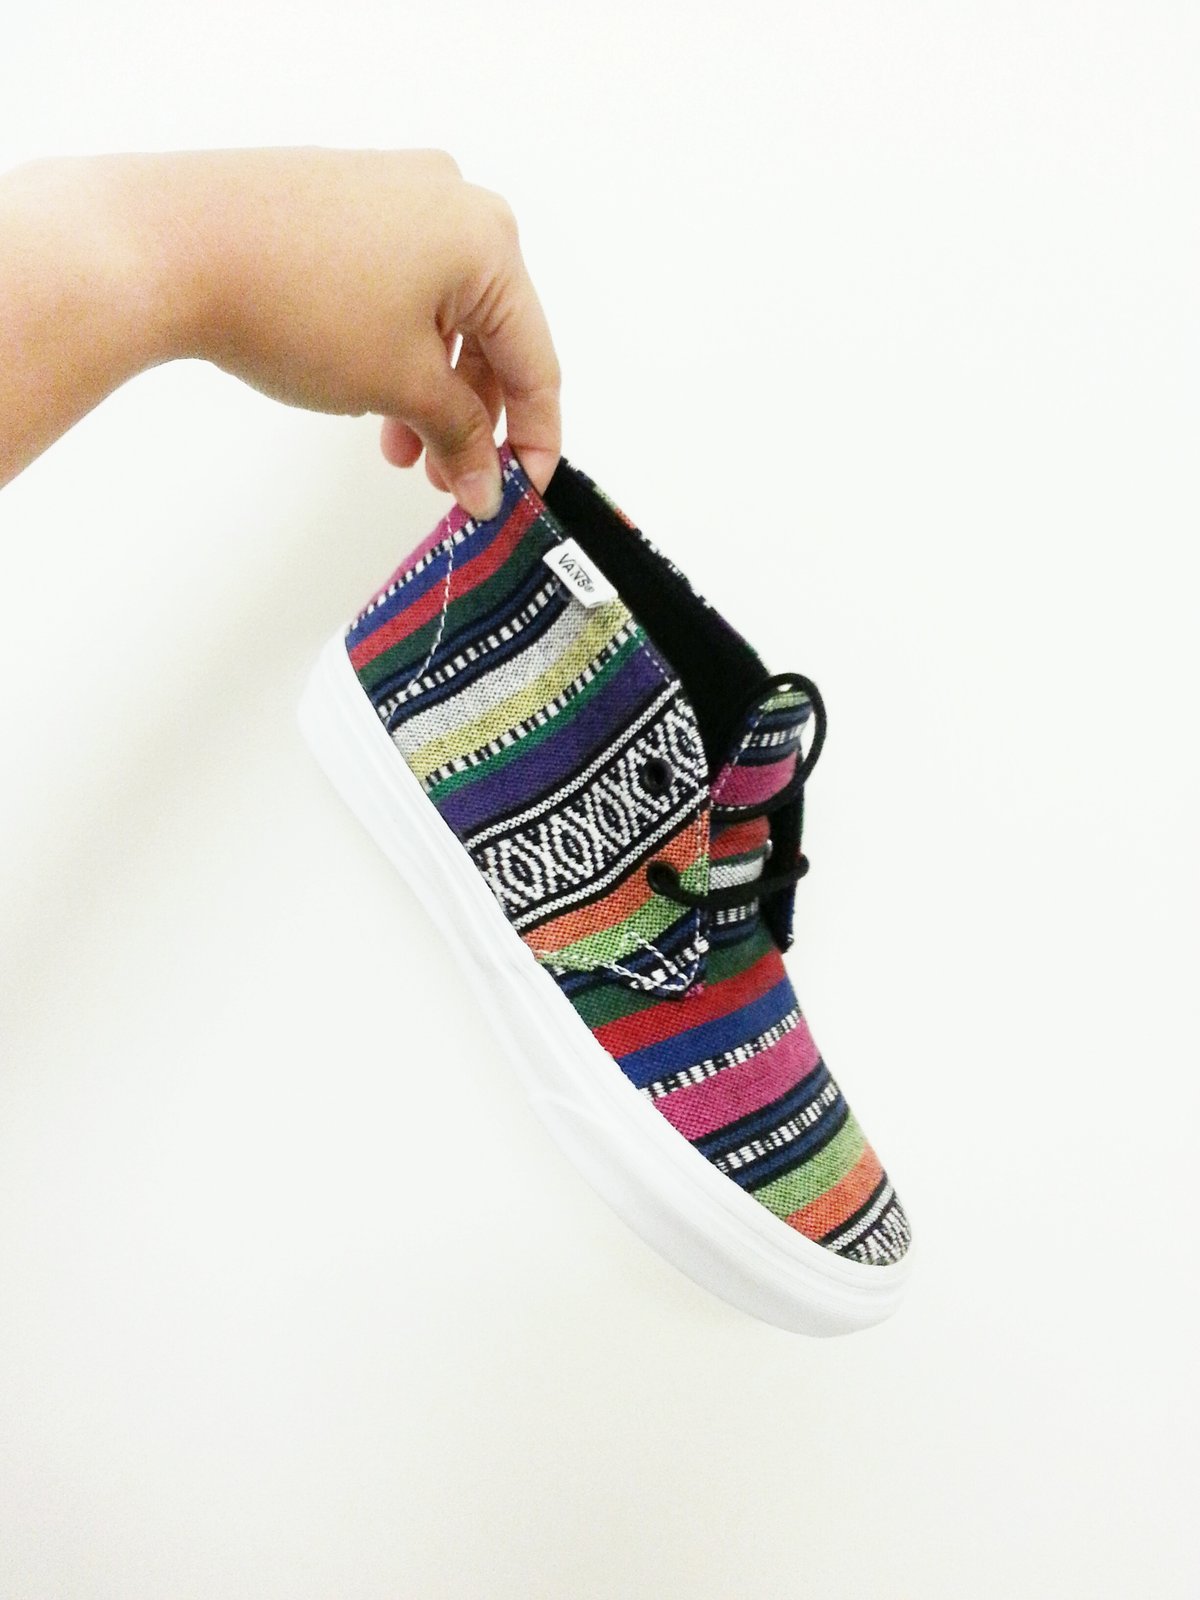 Vans Tribal Aztec Shoes | /